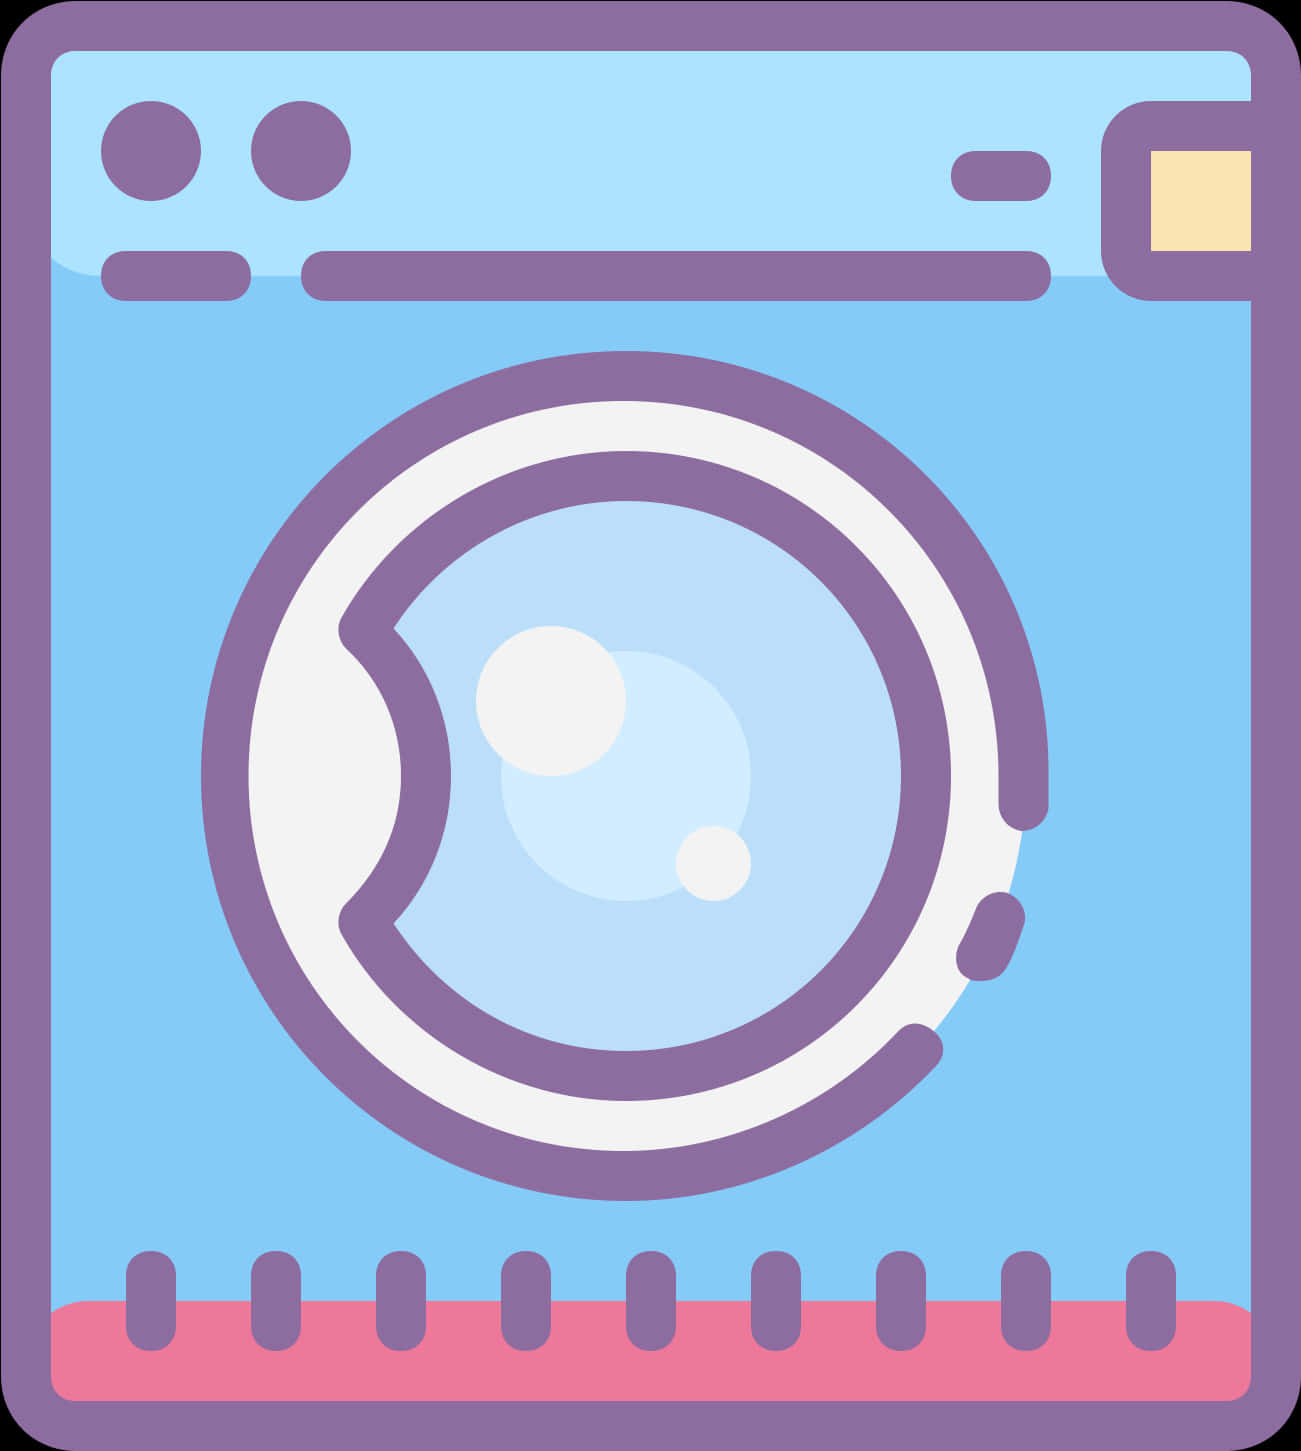 A Blue And Purple Washing Machine